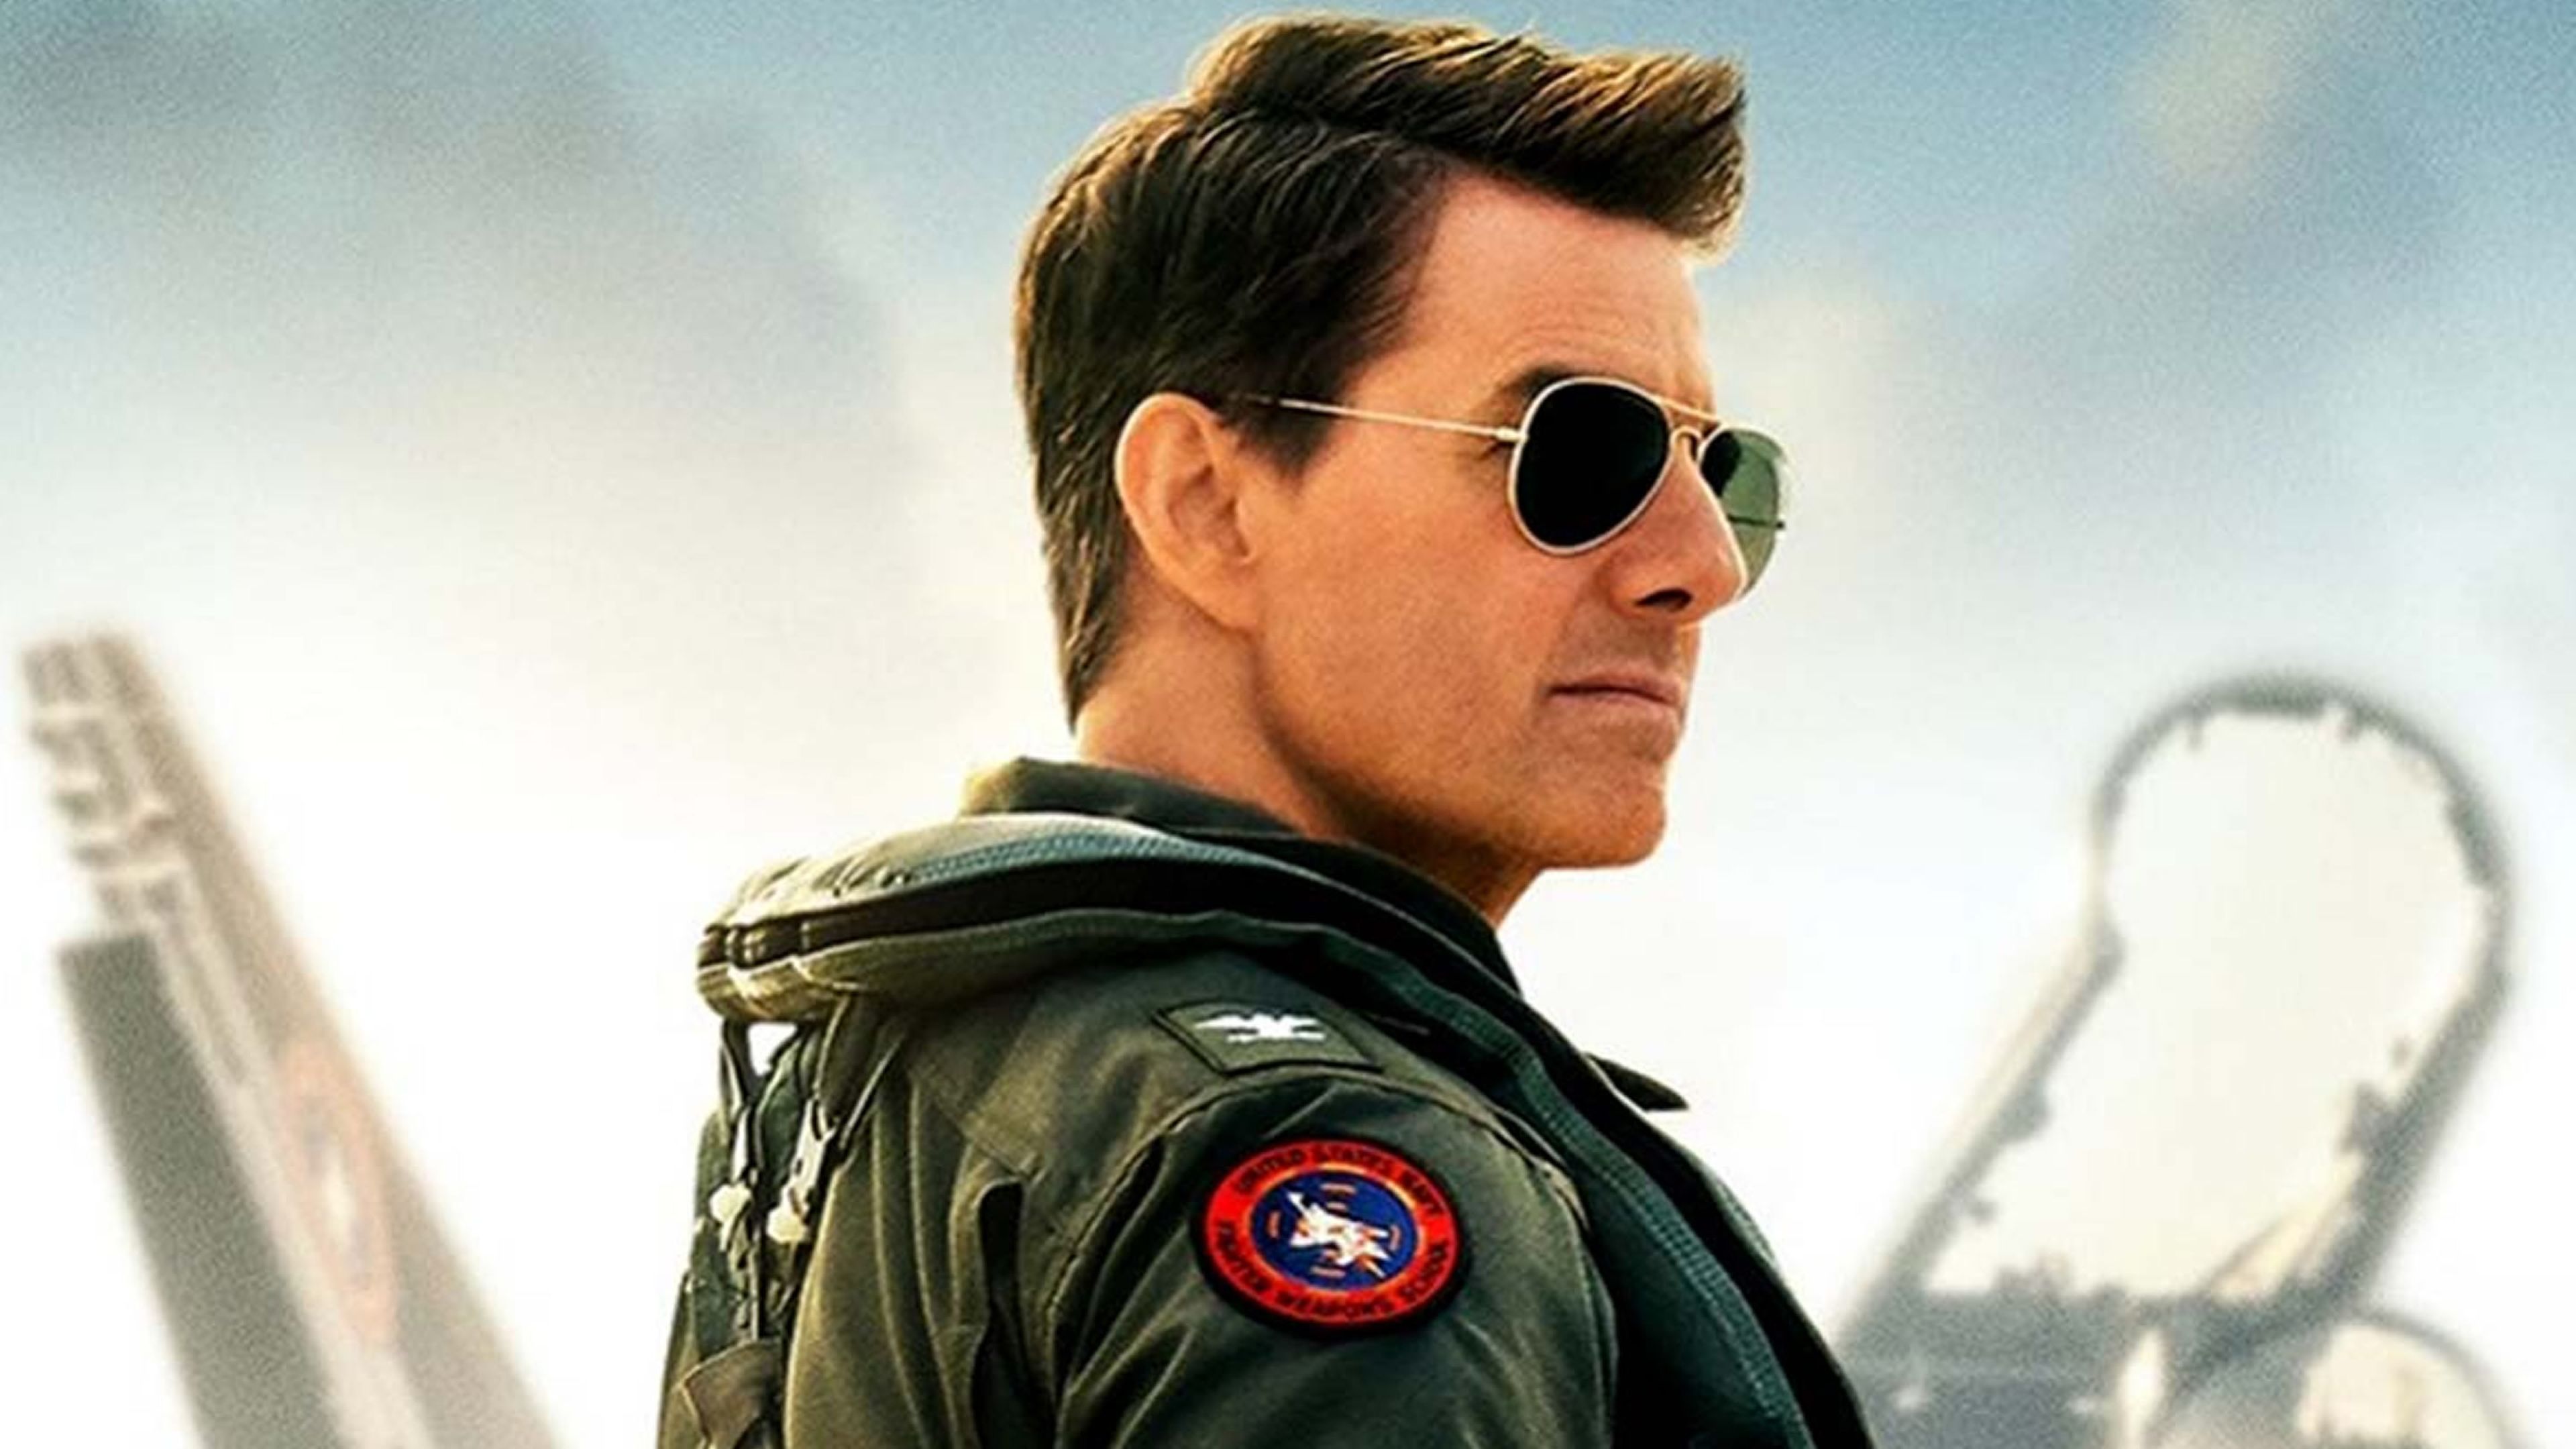 Top Gun: Maverick (2022) - Pete "Maverick" Mitchell (Tom Cruise)